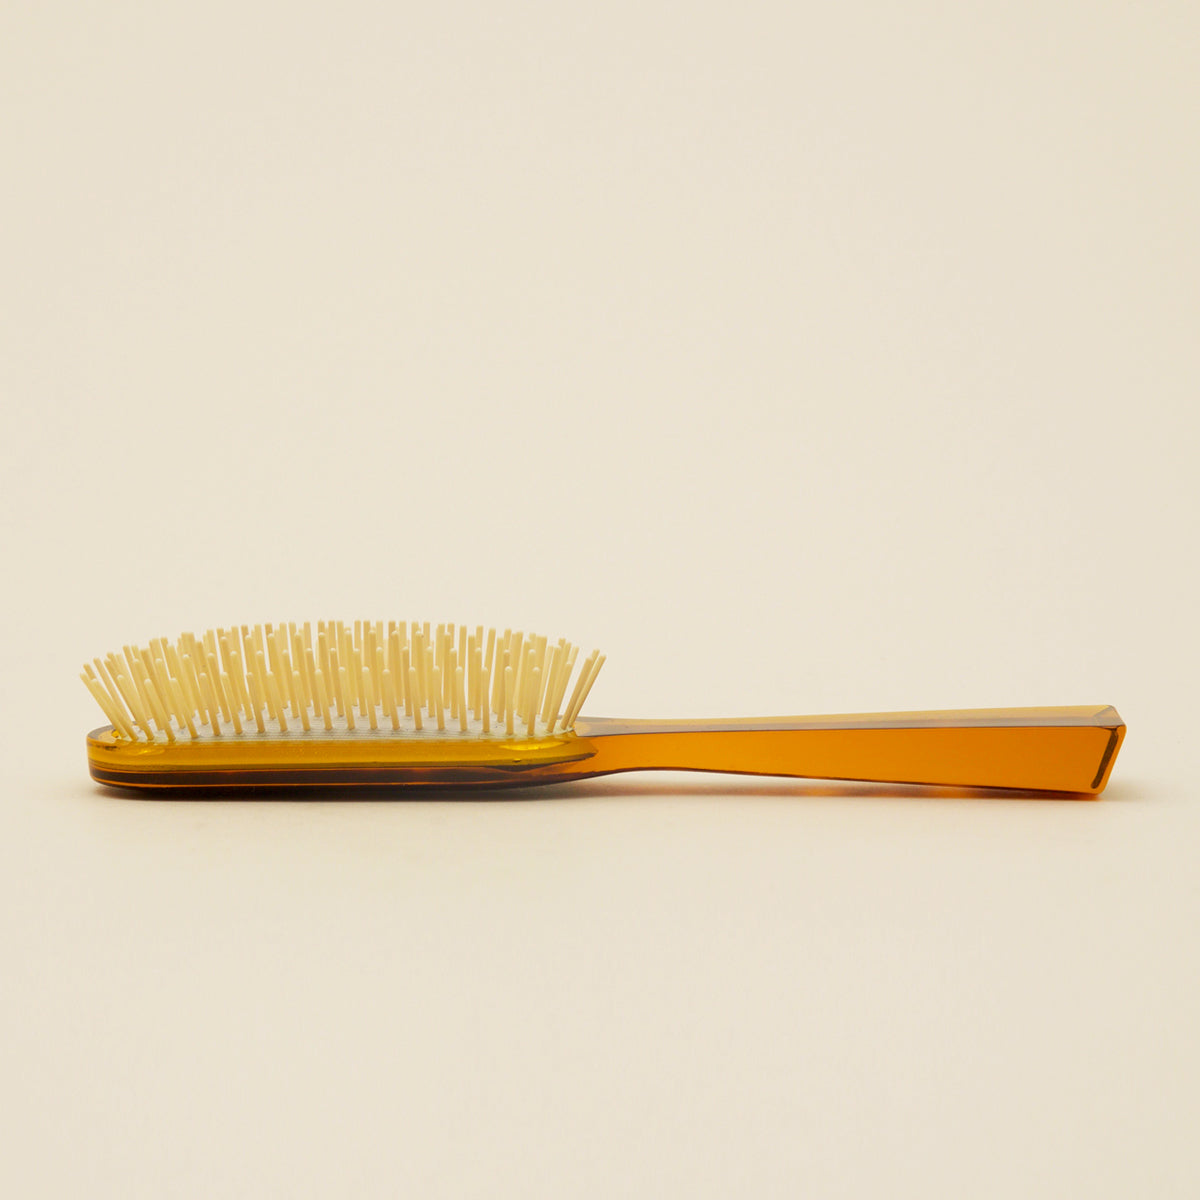 Cellulose Hairbrush